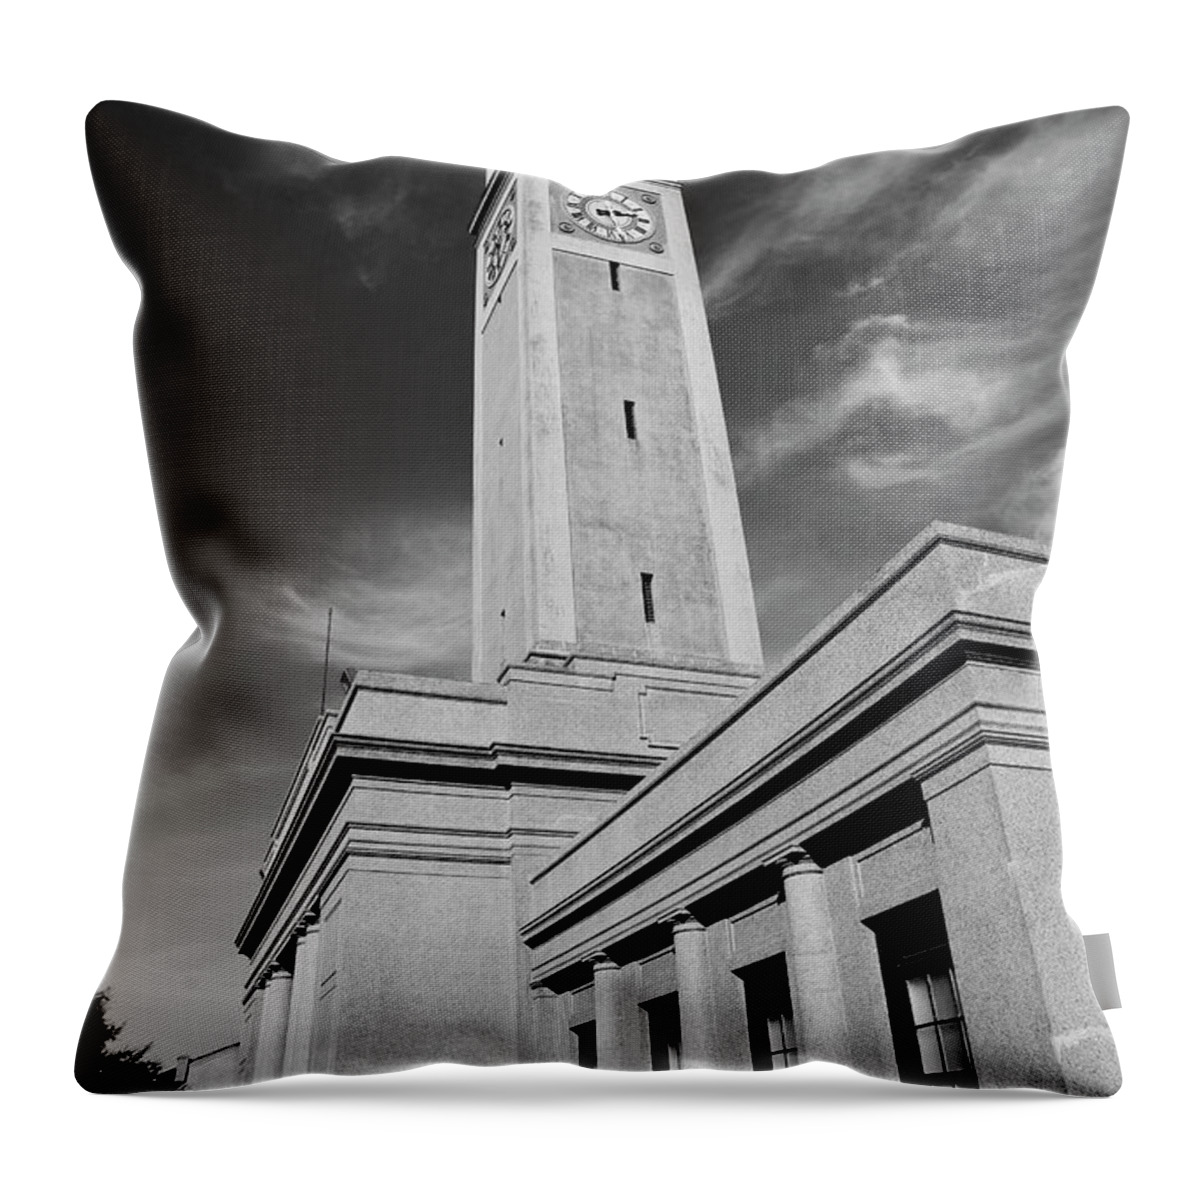 Lsu Throw Pillow featuring the photograph Memorial Tower - LSU BW by Scott Pellegrin